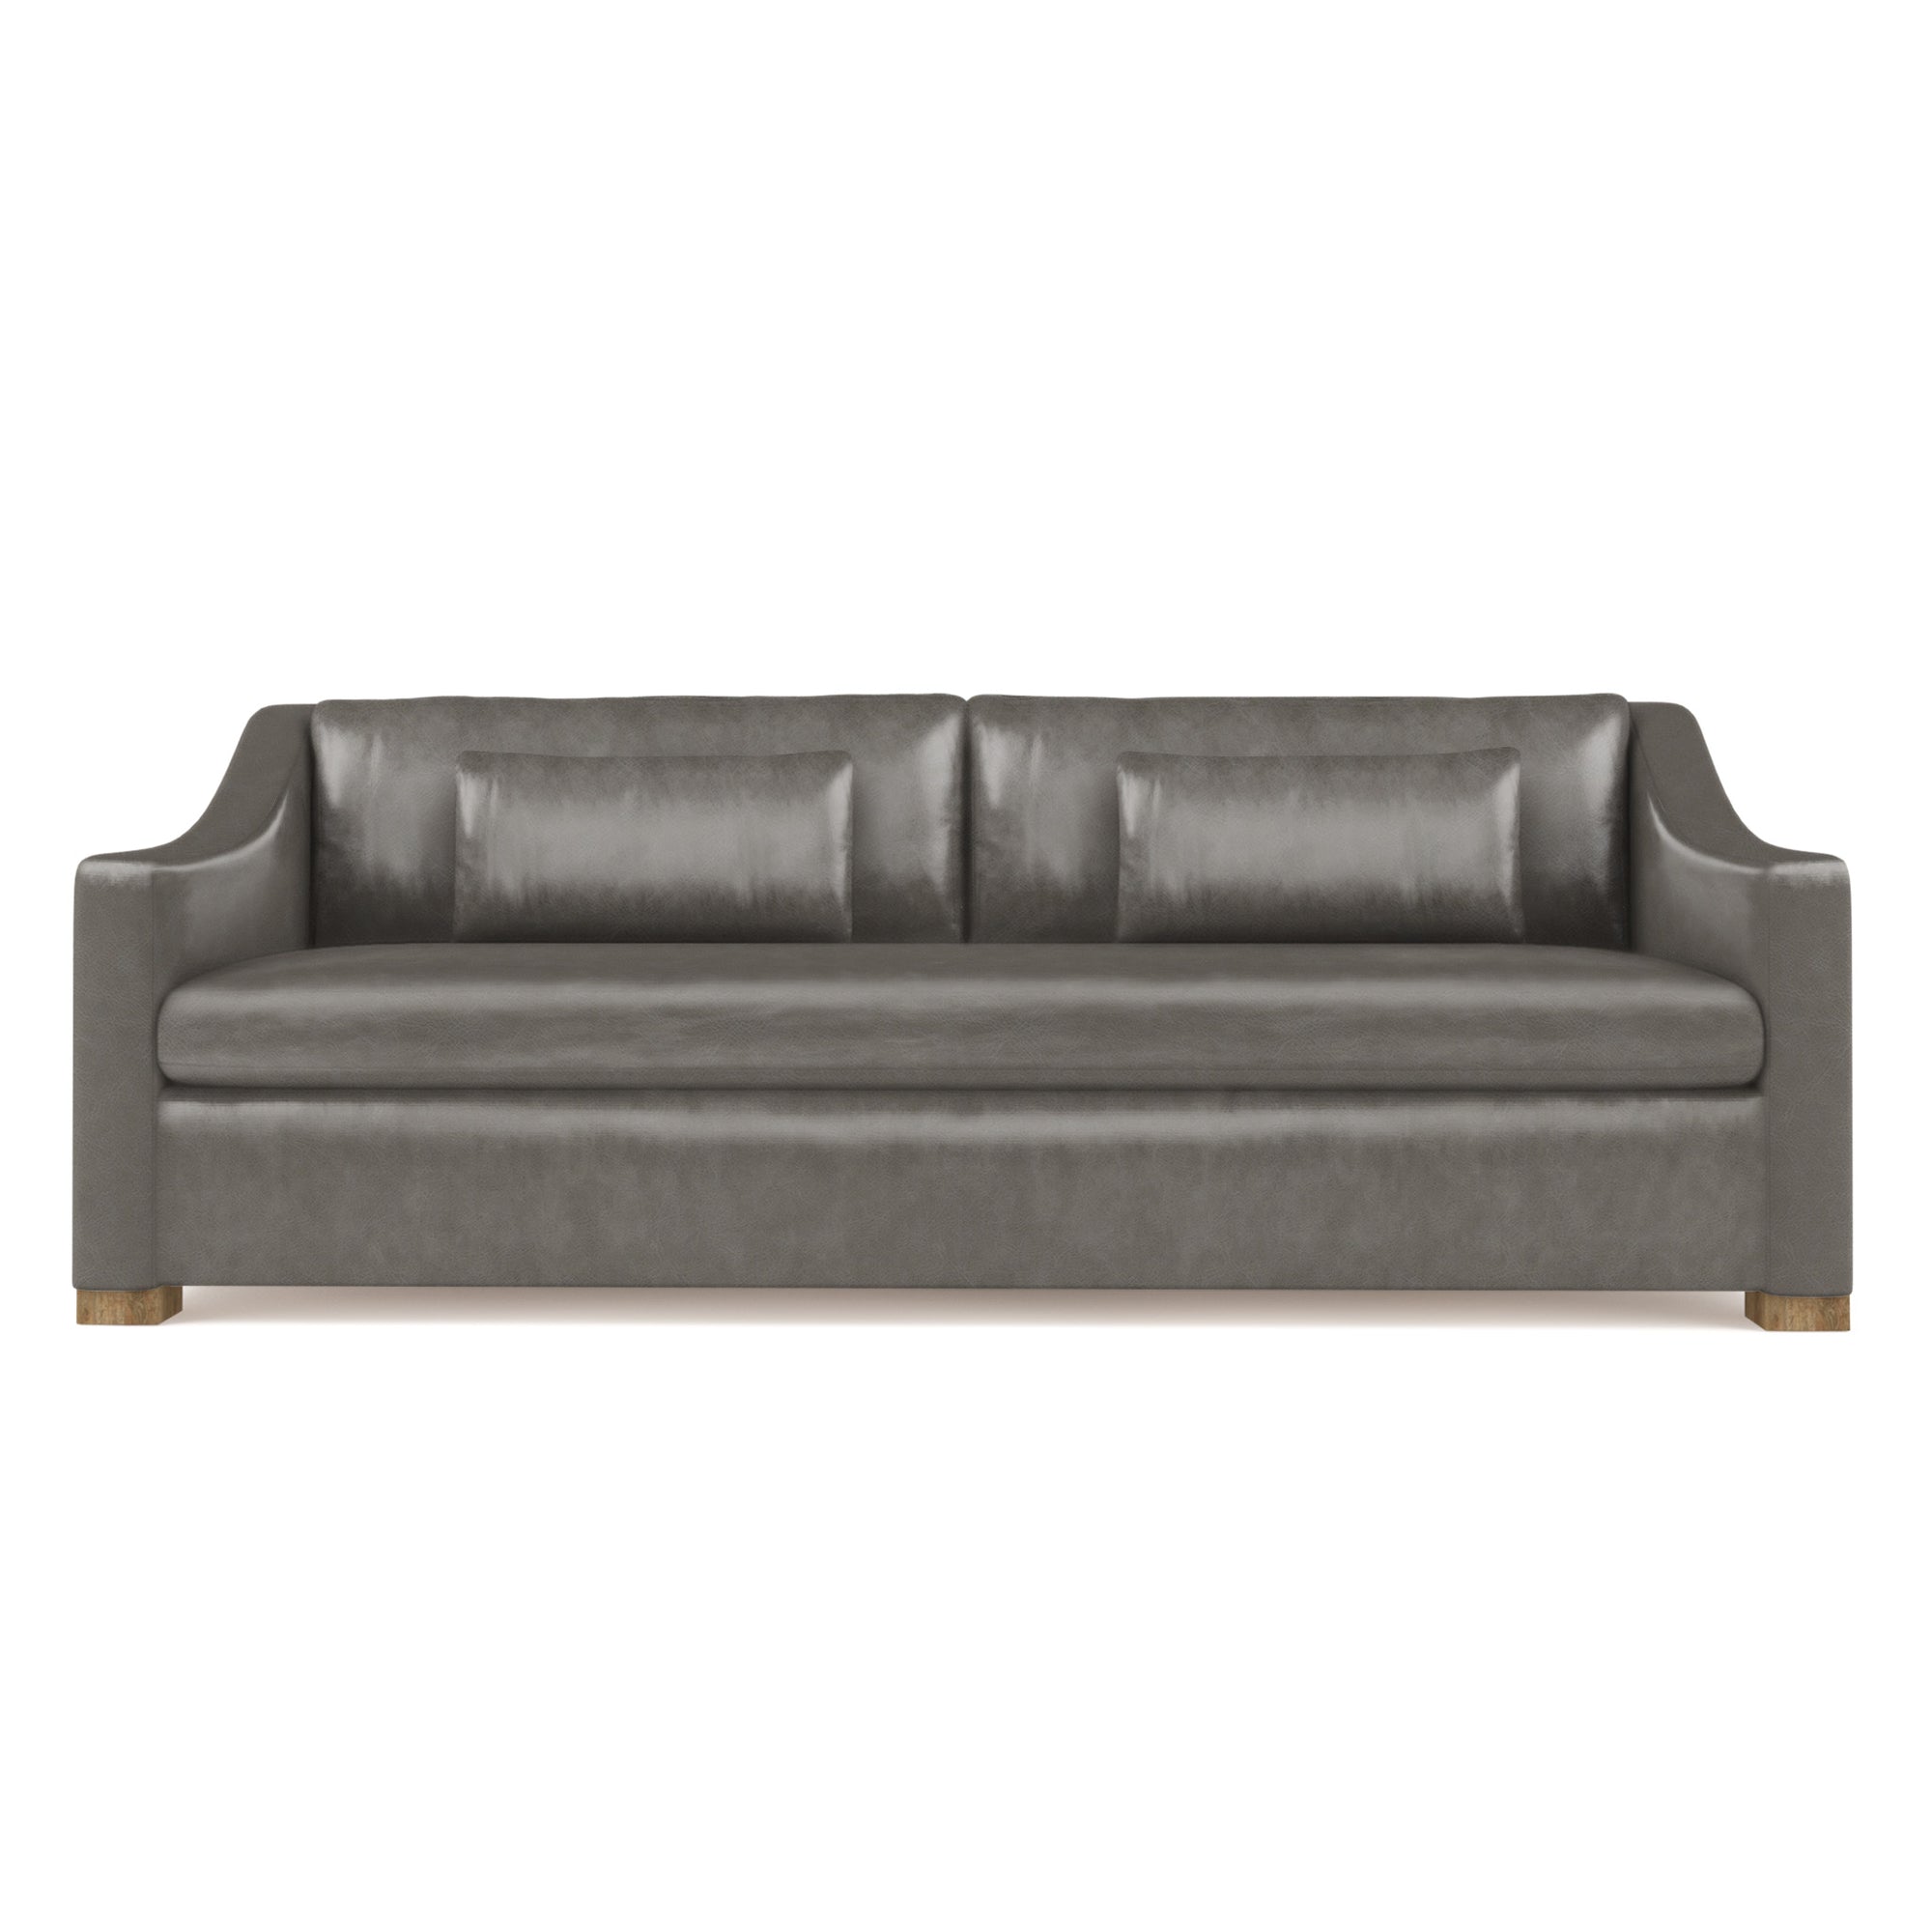 Crosby Sofa - Pumice Vintage Leather